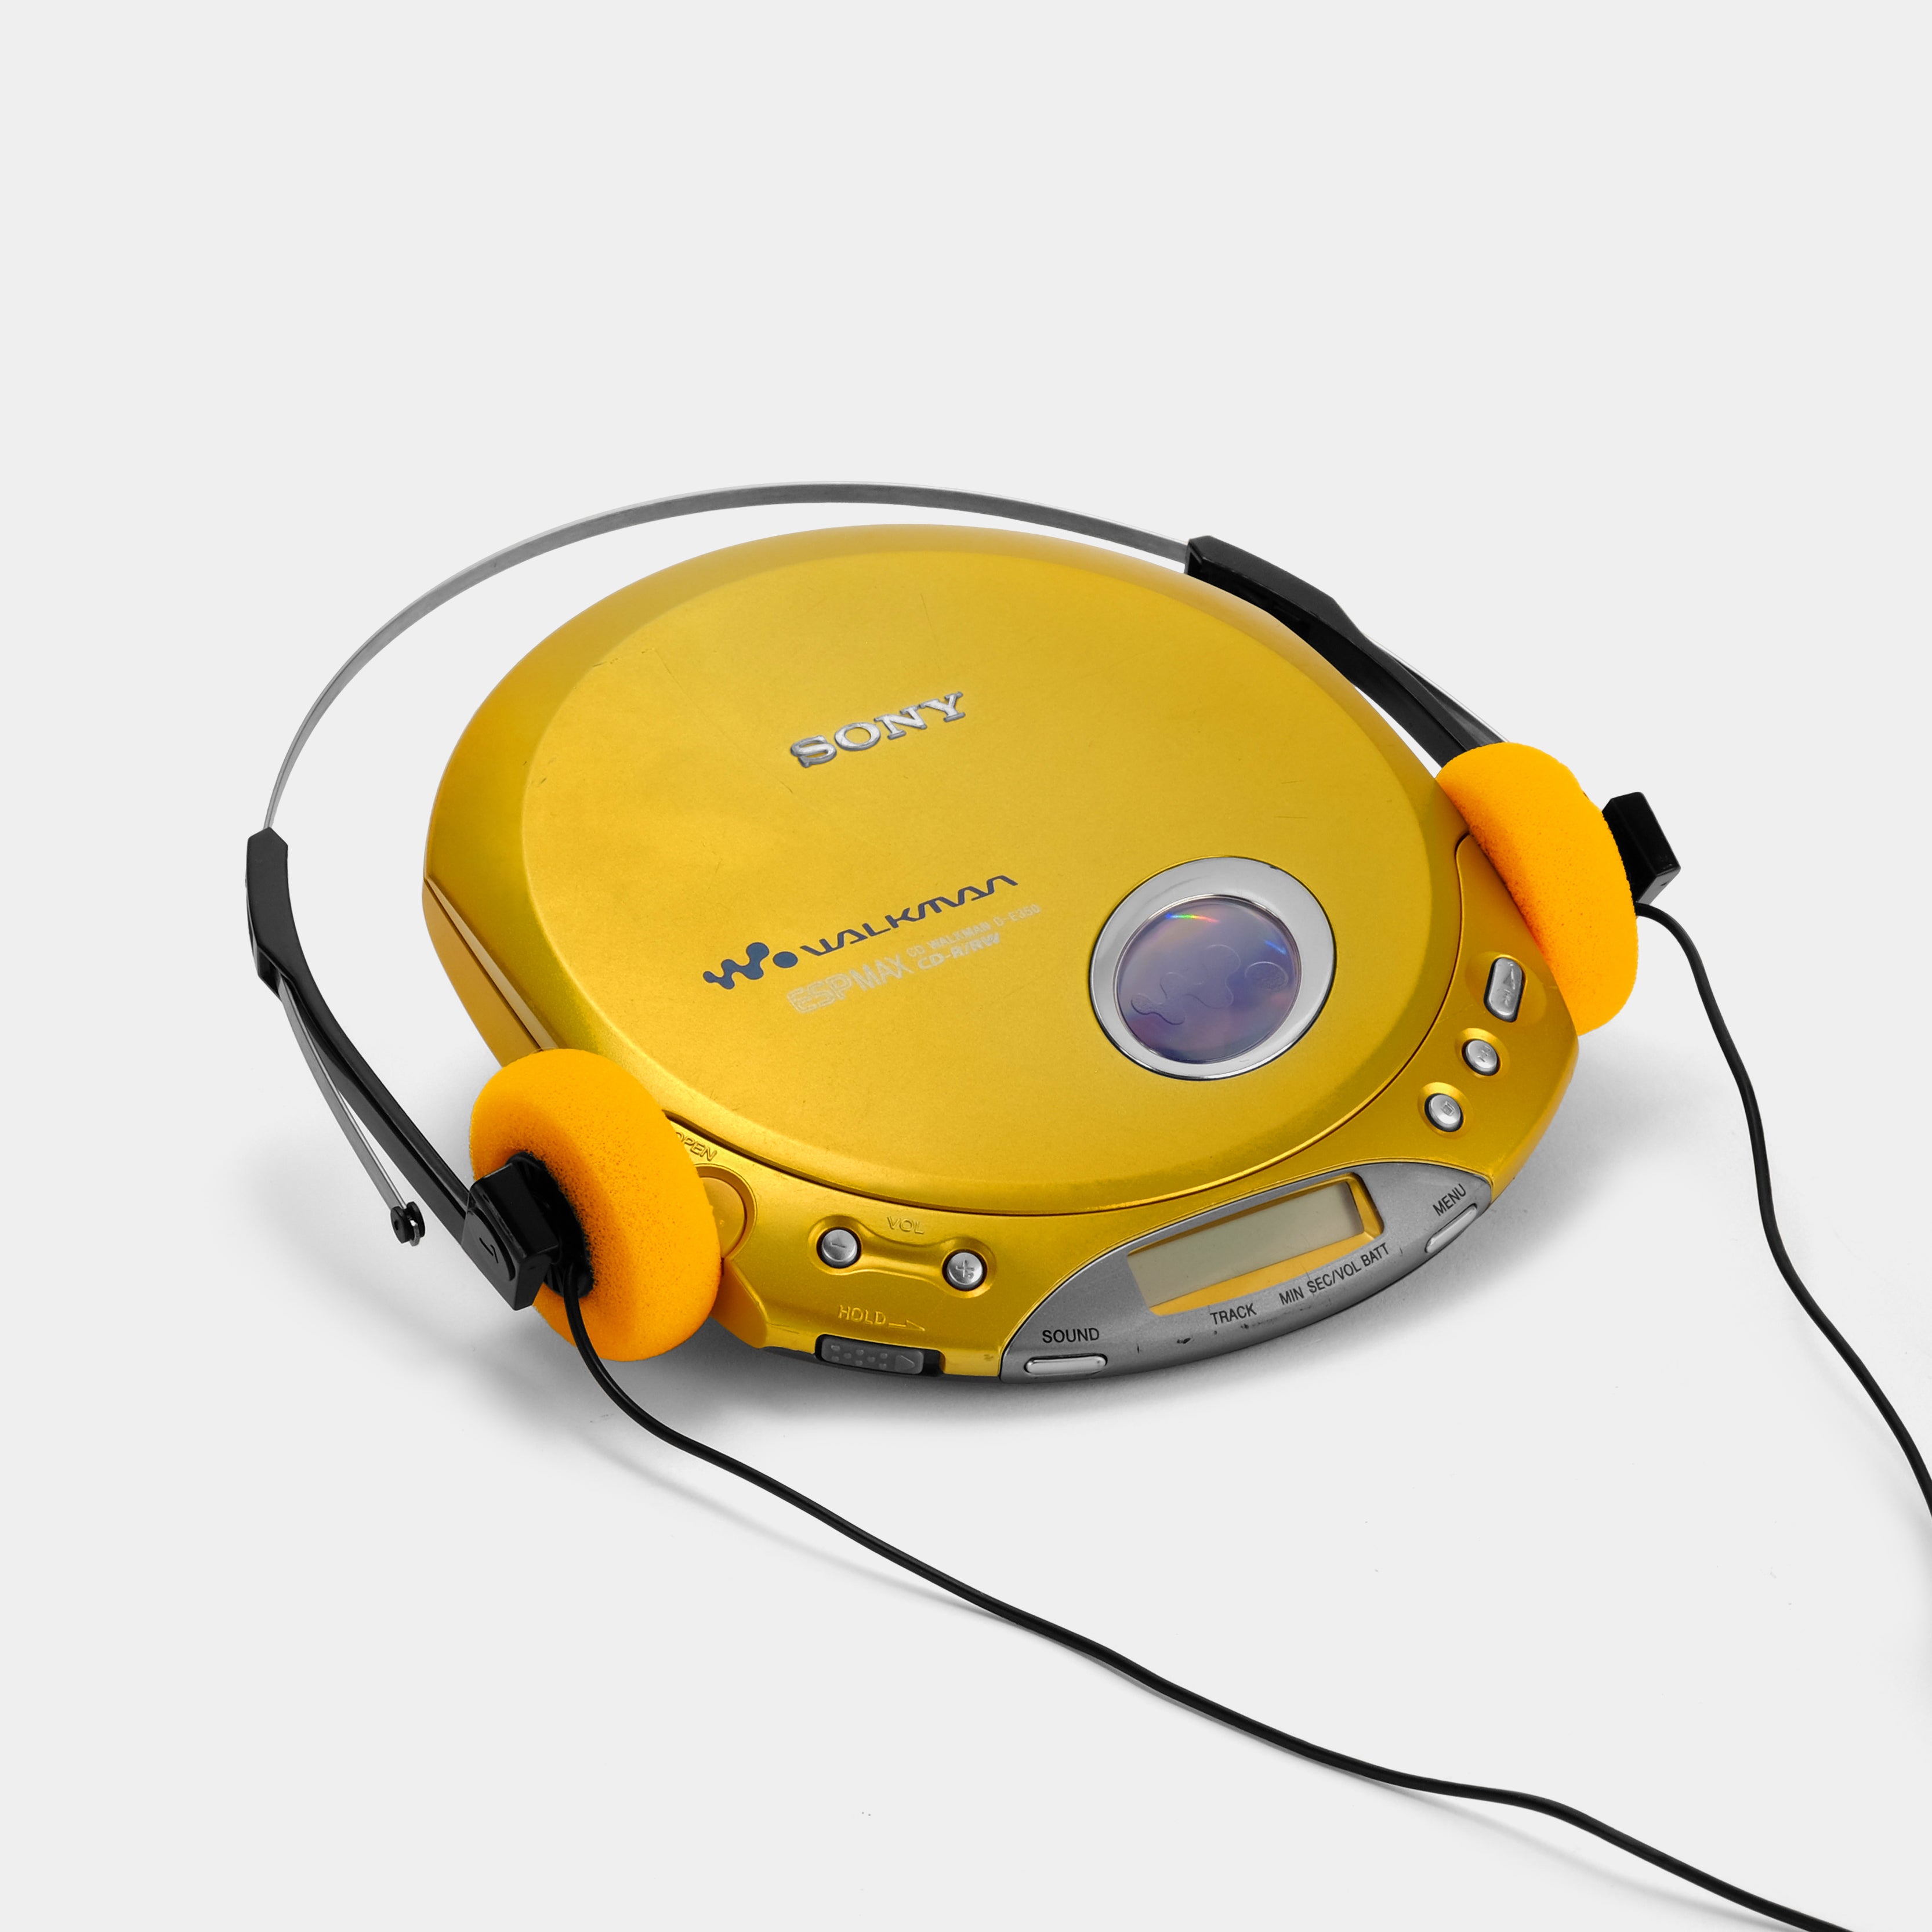 Sony Walkman D-E350 Gold Portable CD Player